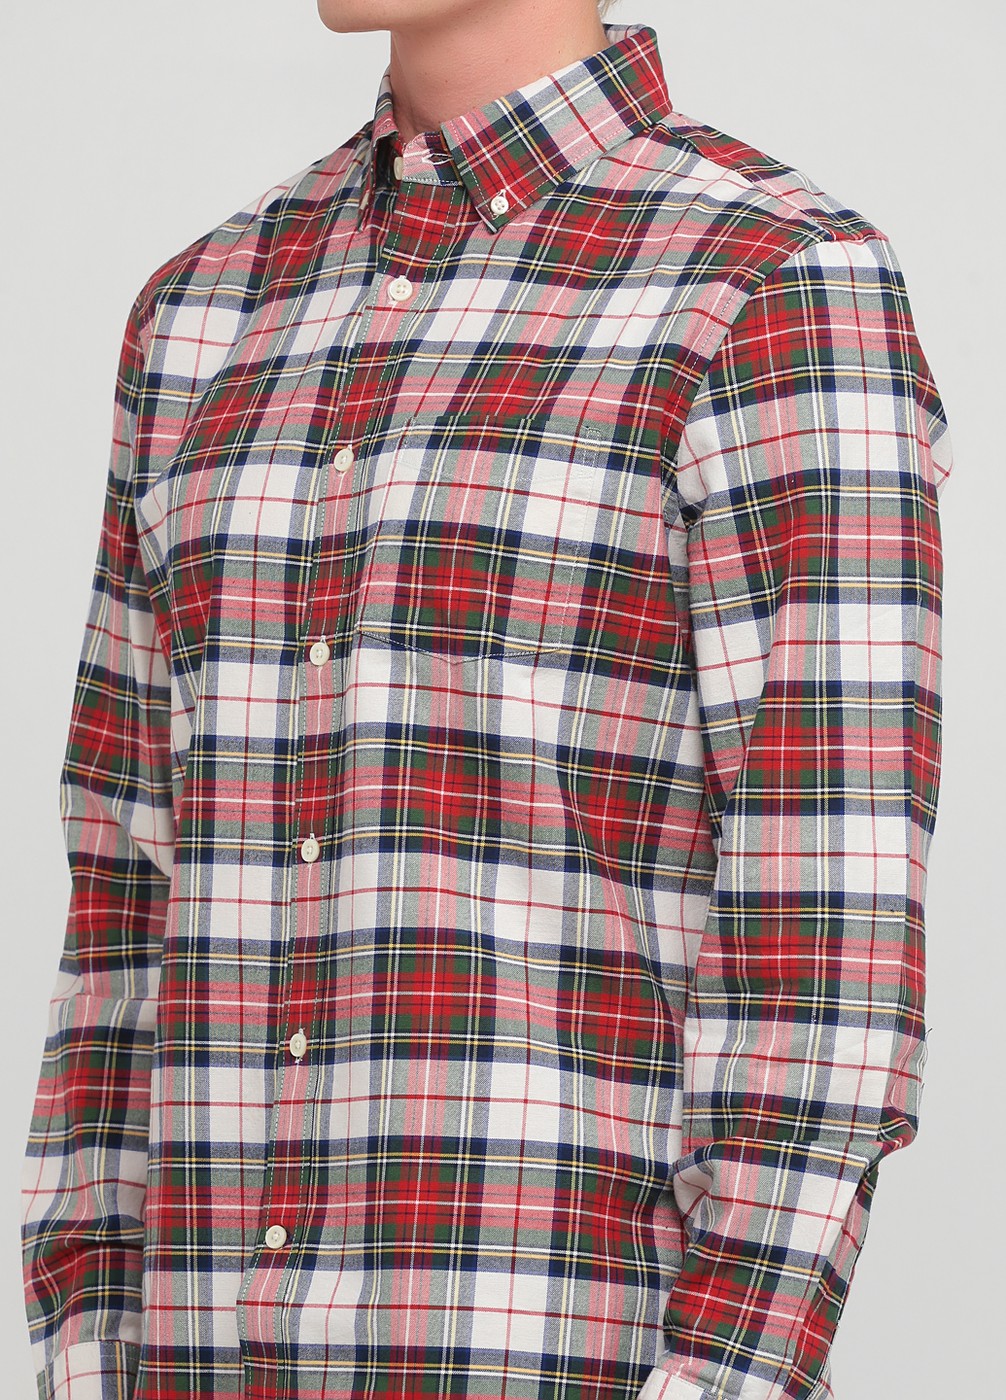 Мужская рубашка - рубашка GAP, XL, XL